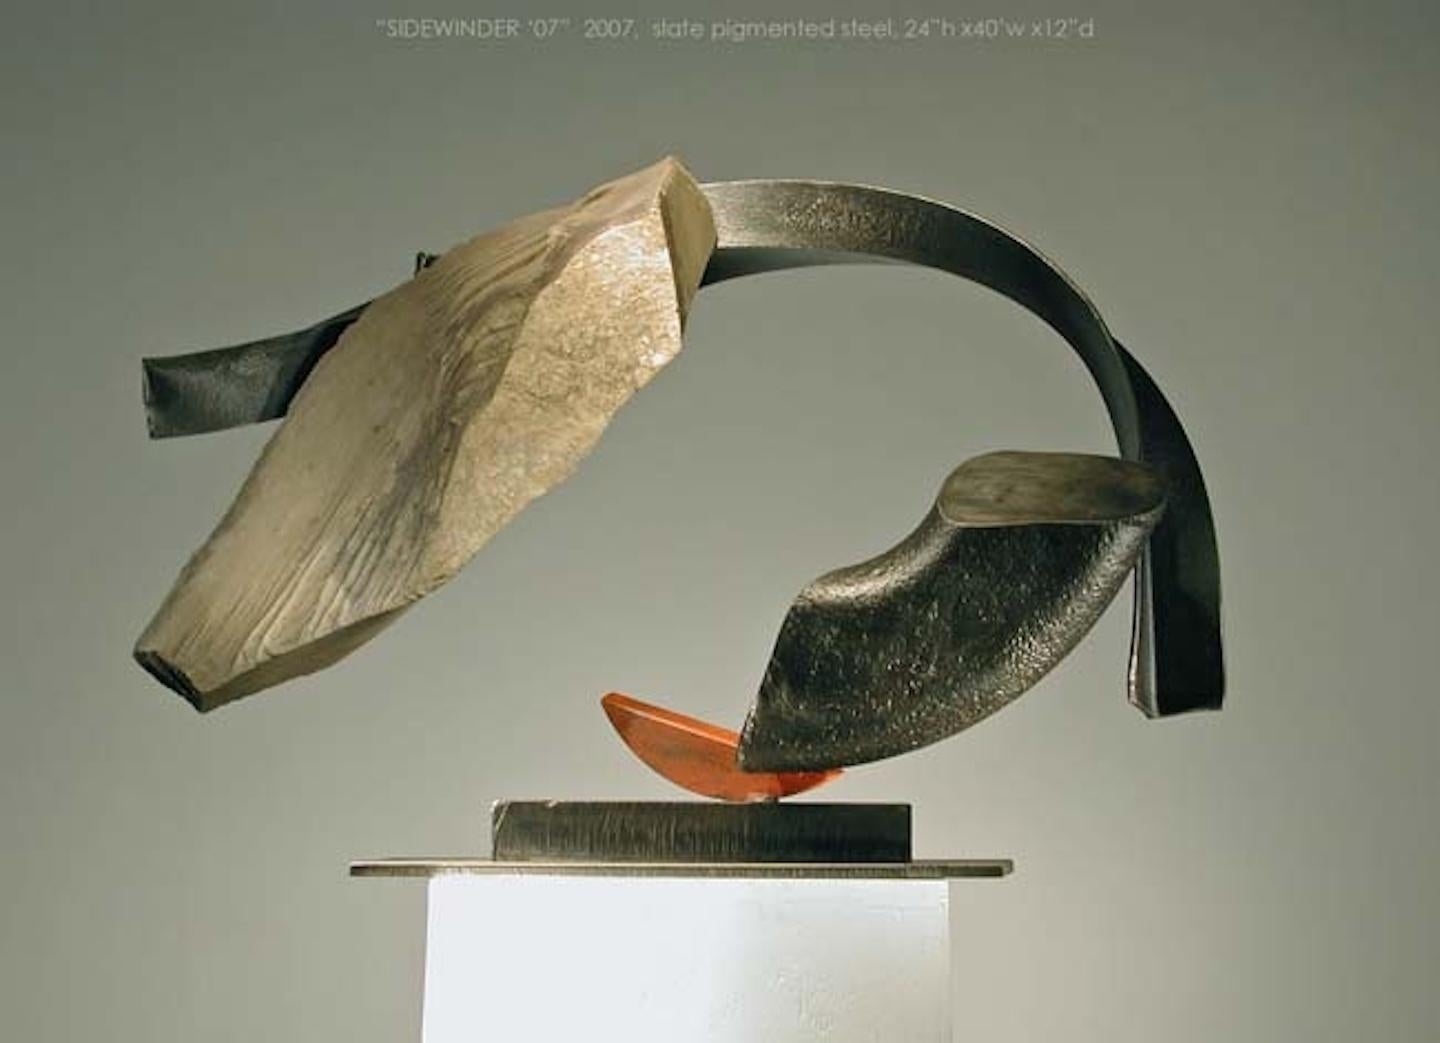 John Van Alstine Abstract Sculpture - Sidewinder '07